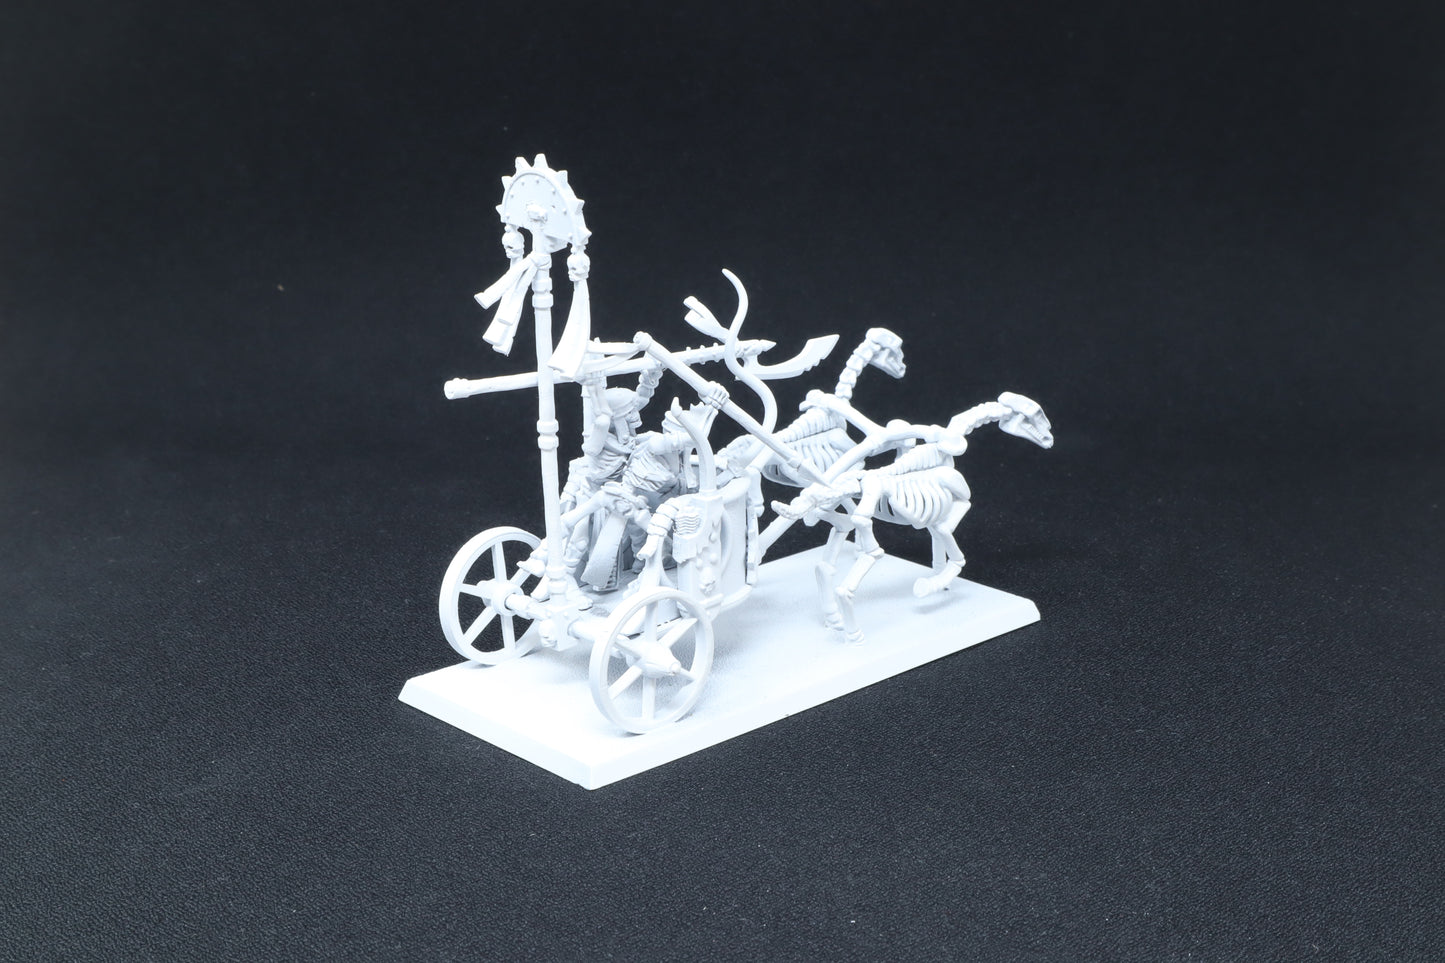 Skeleton Chariot